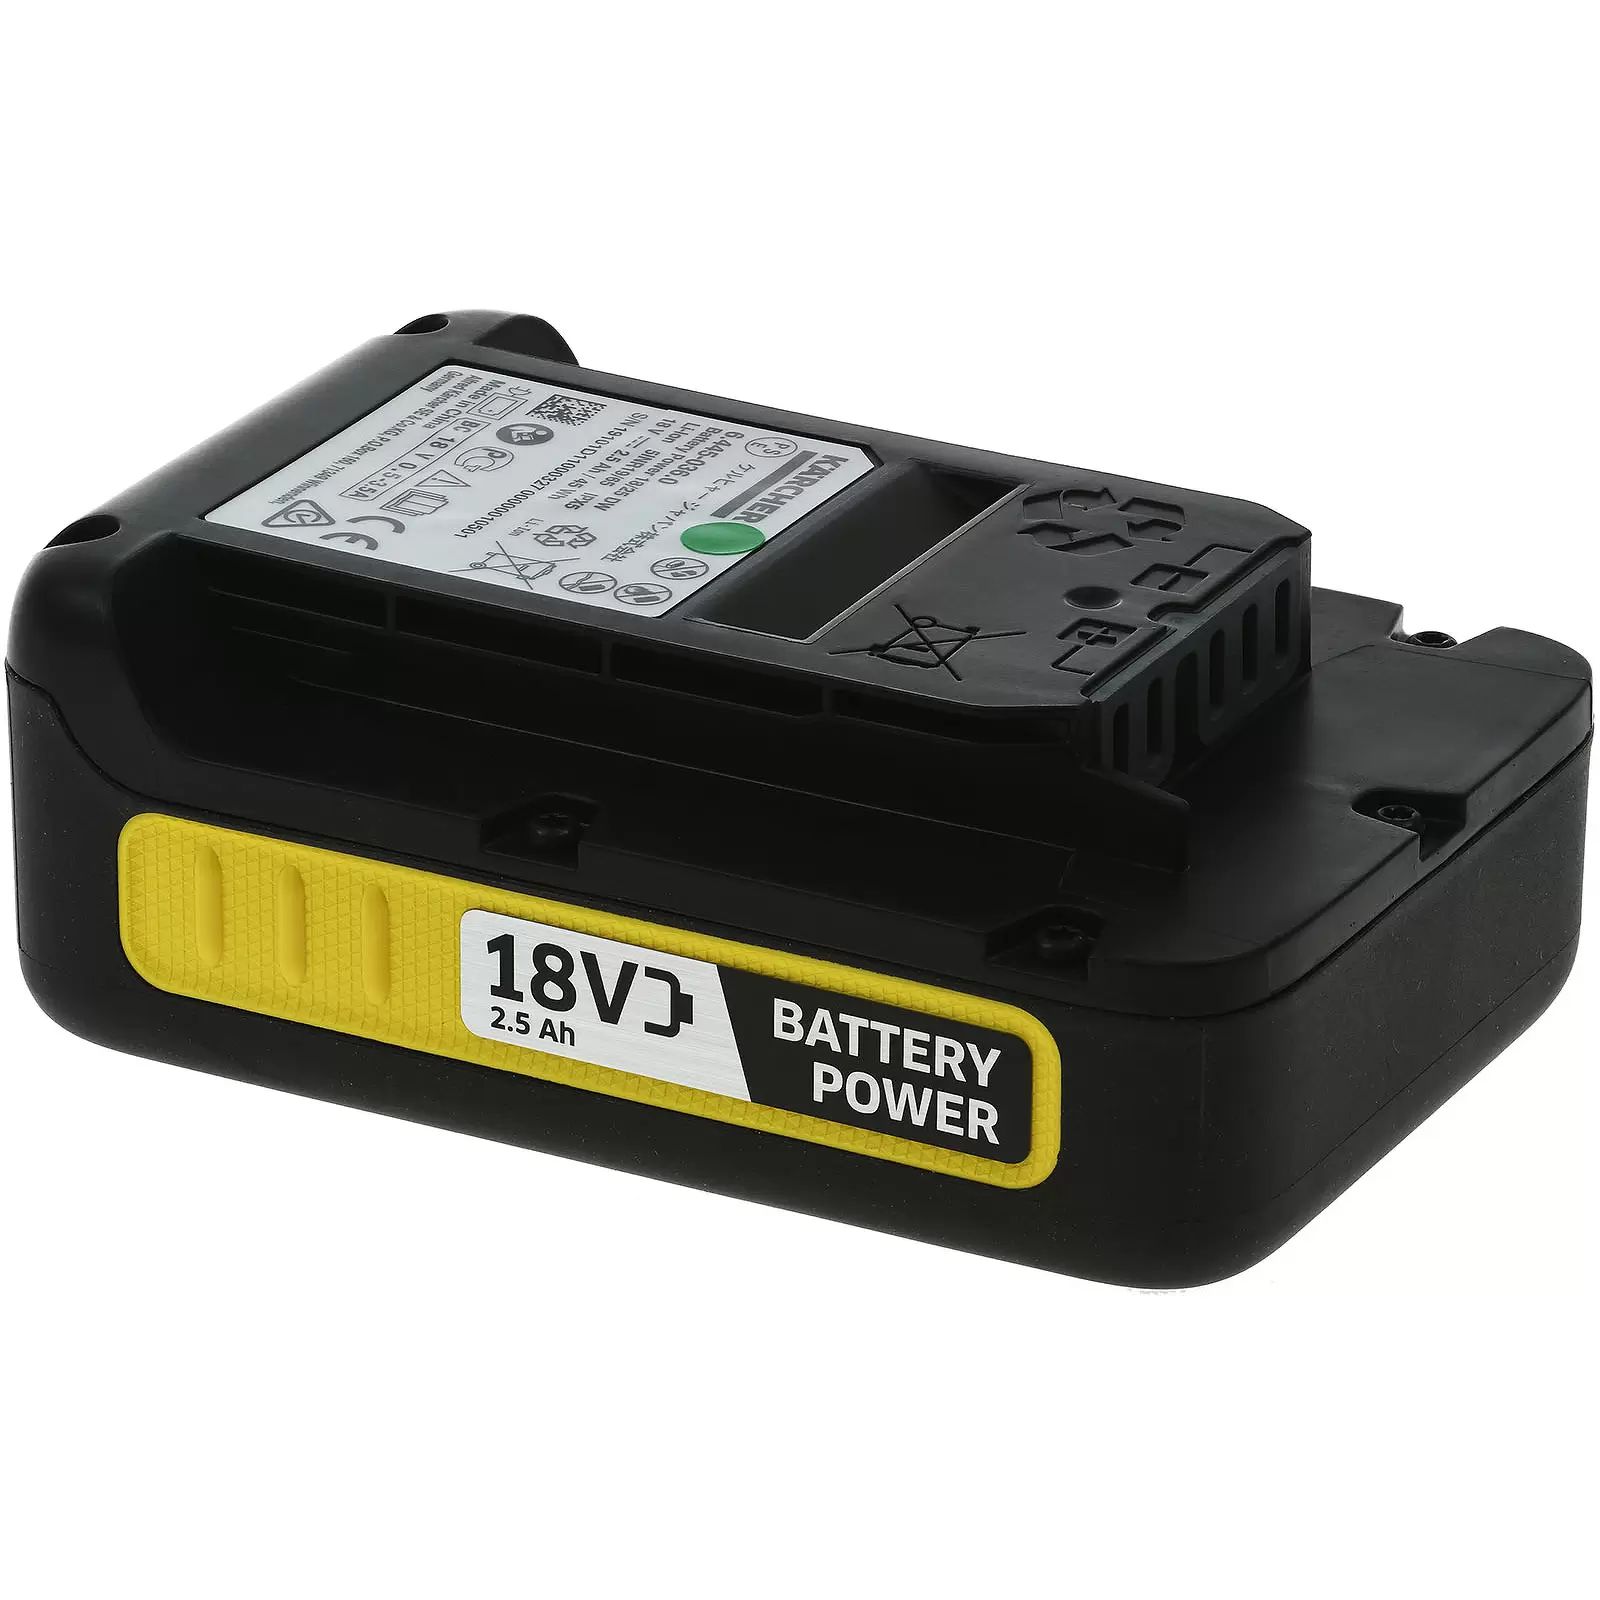 Kärcher Akku Battery Power 18/25 für alle Geräte der Kärcher 18V Battery Power Akkuplattform